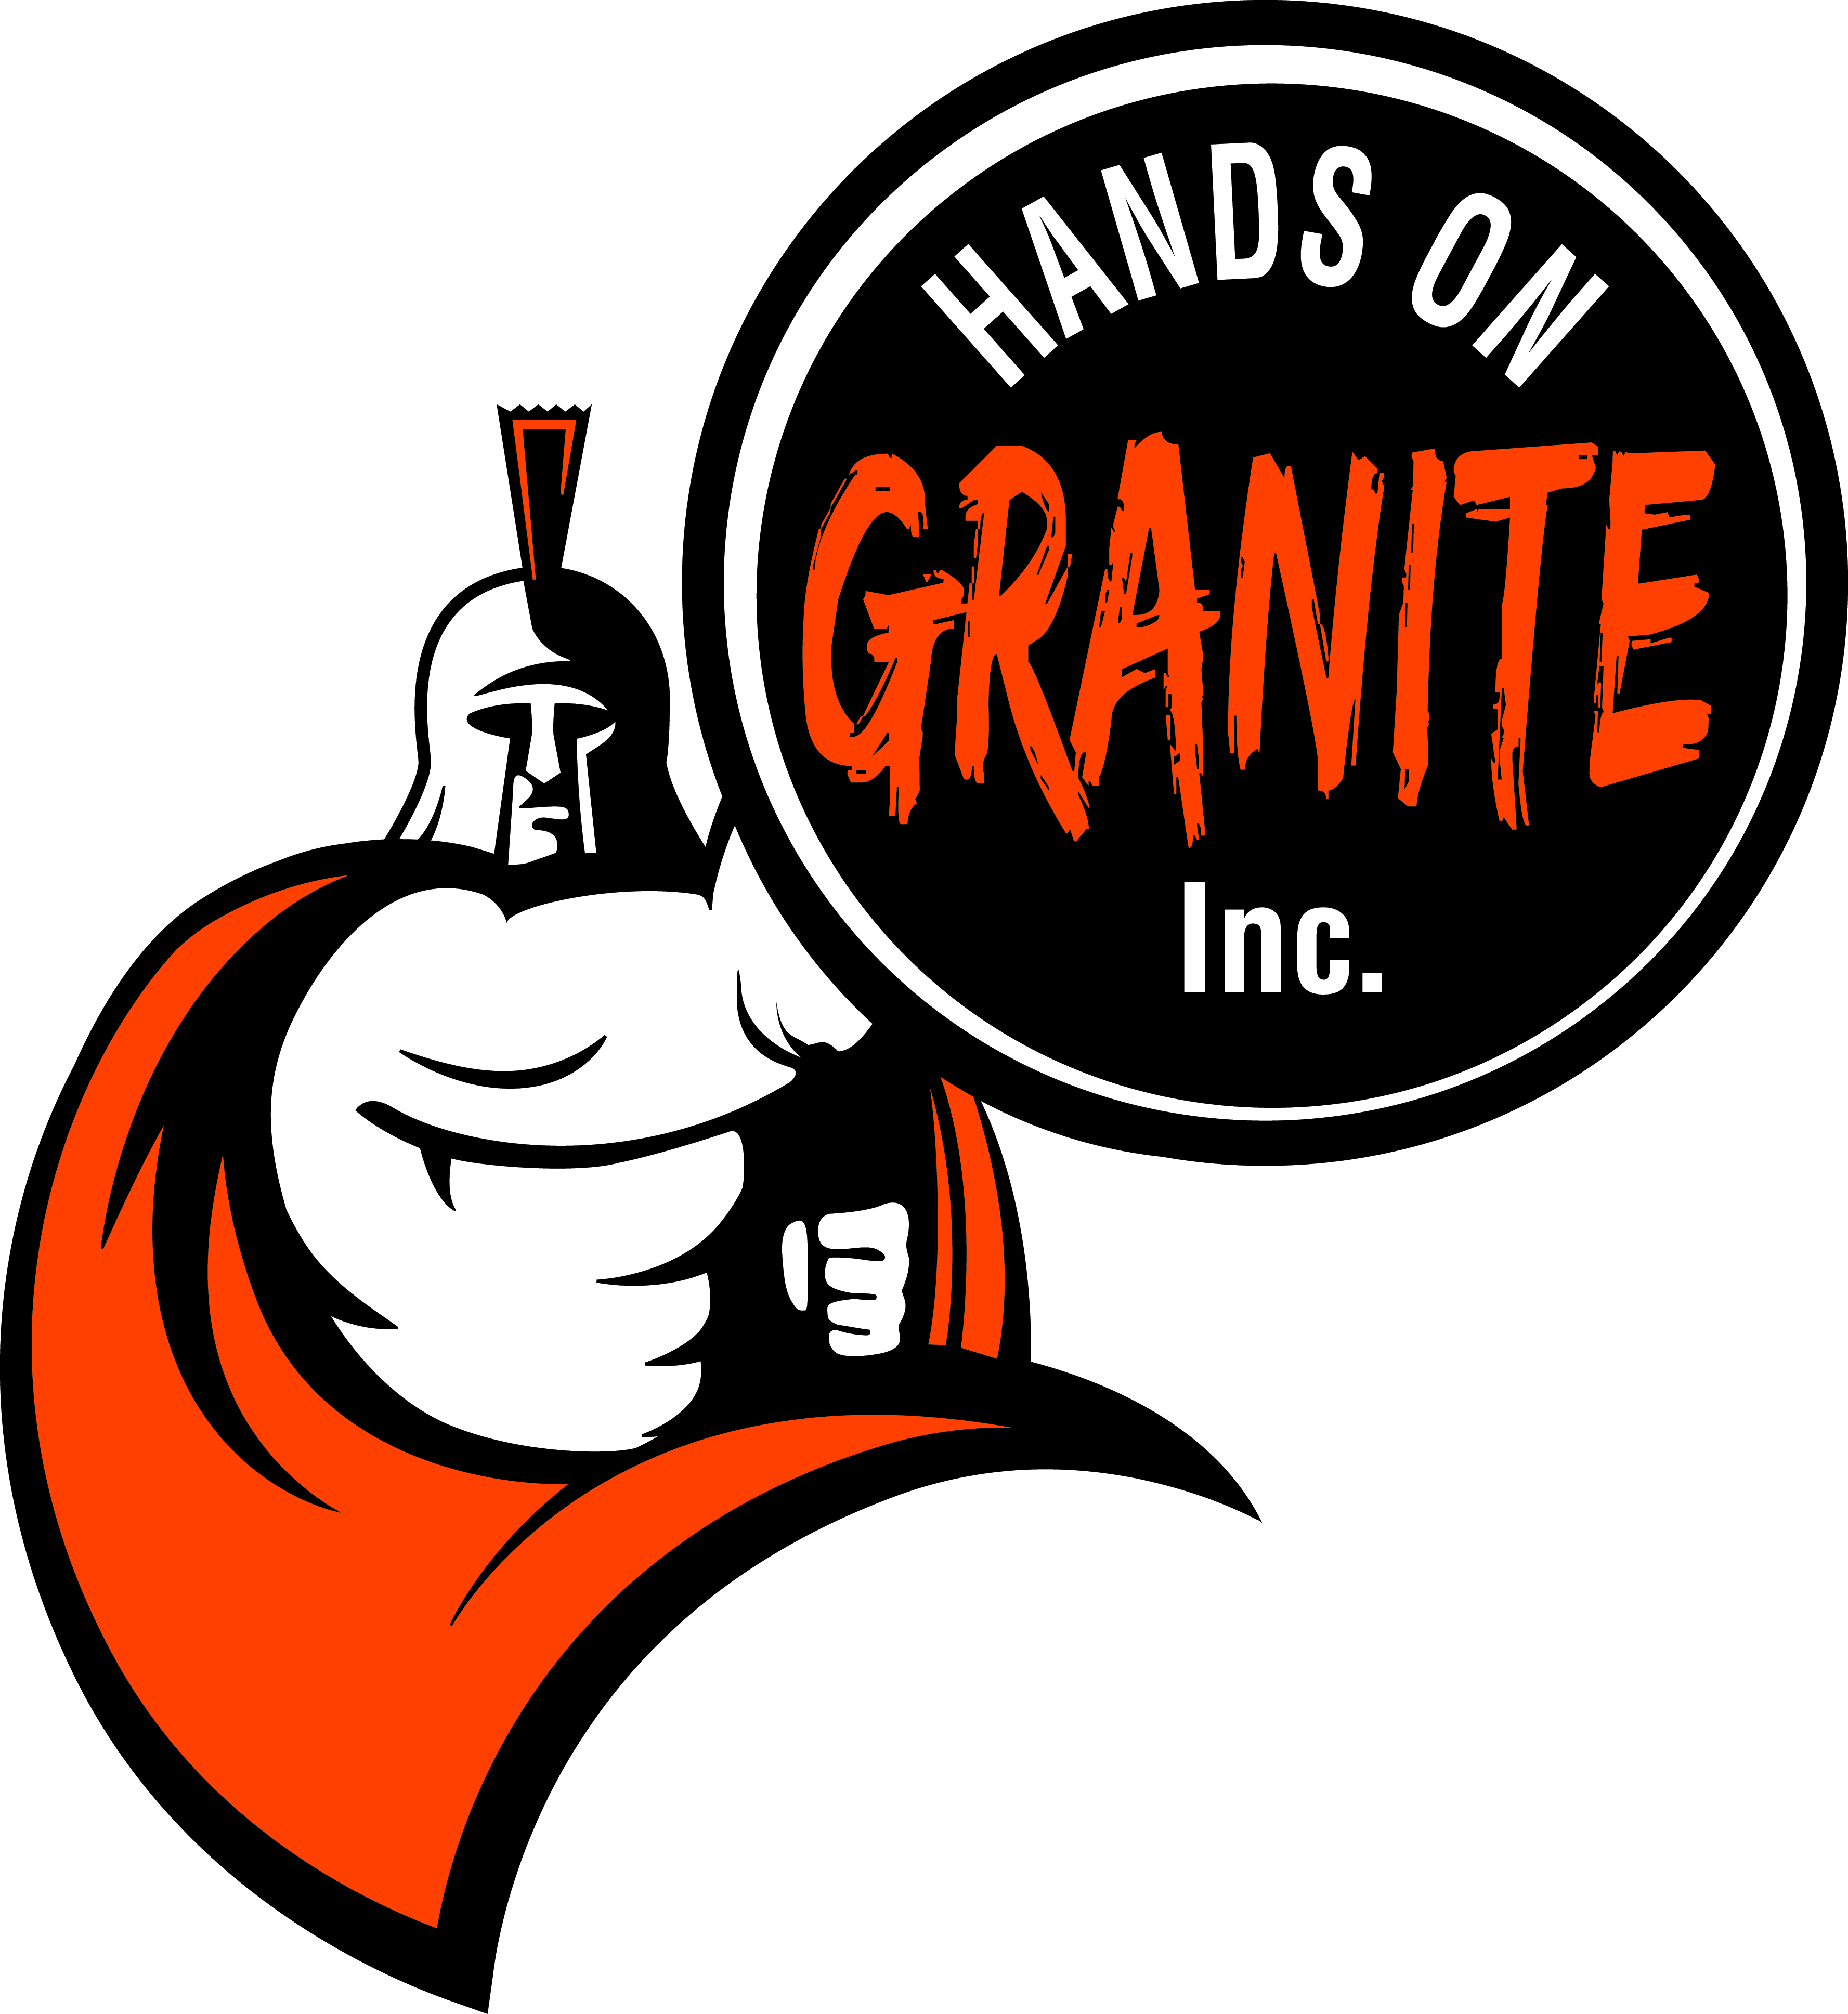 Hands On Granite, Inc. Logo